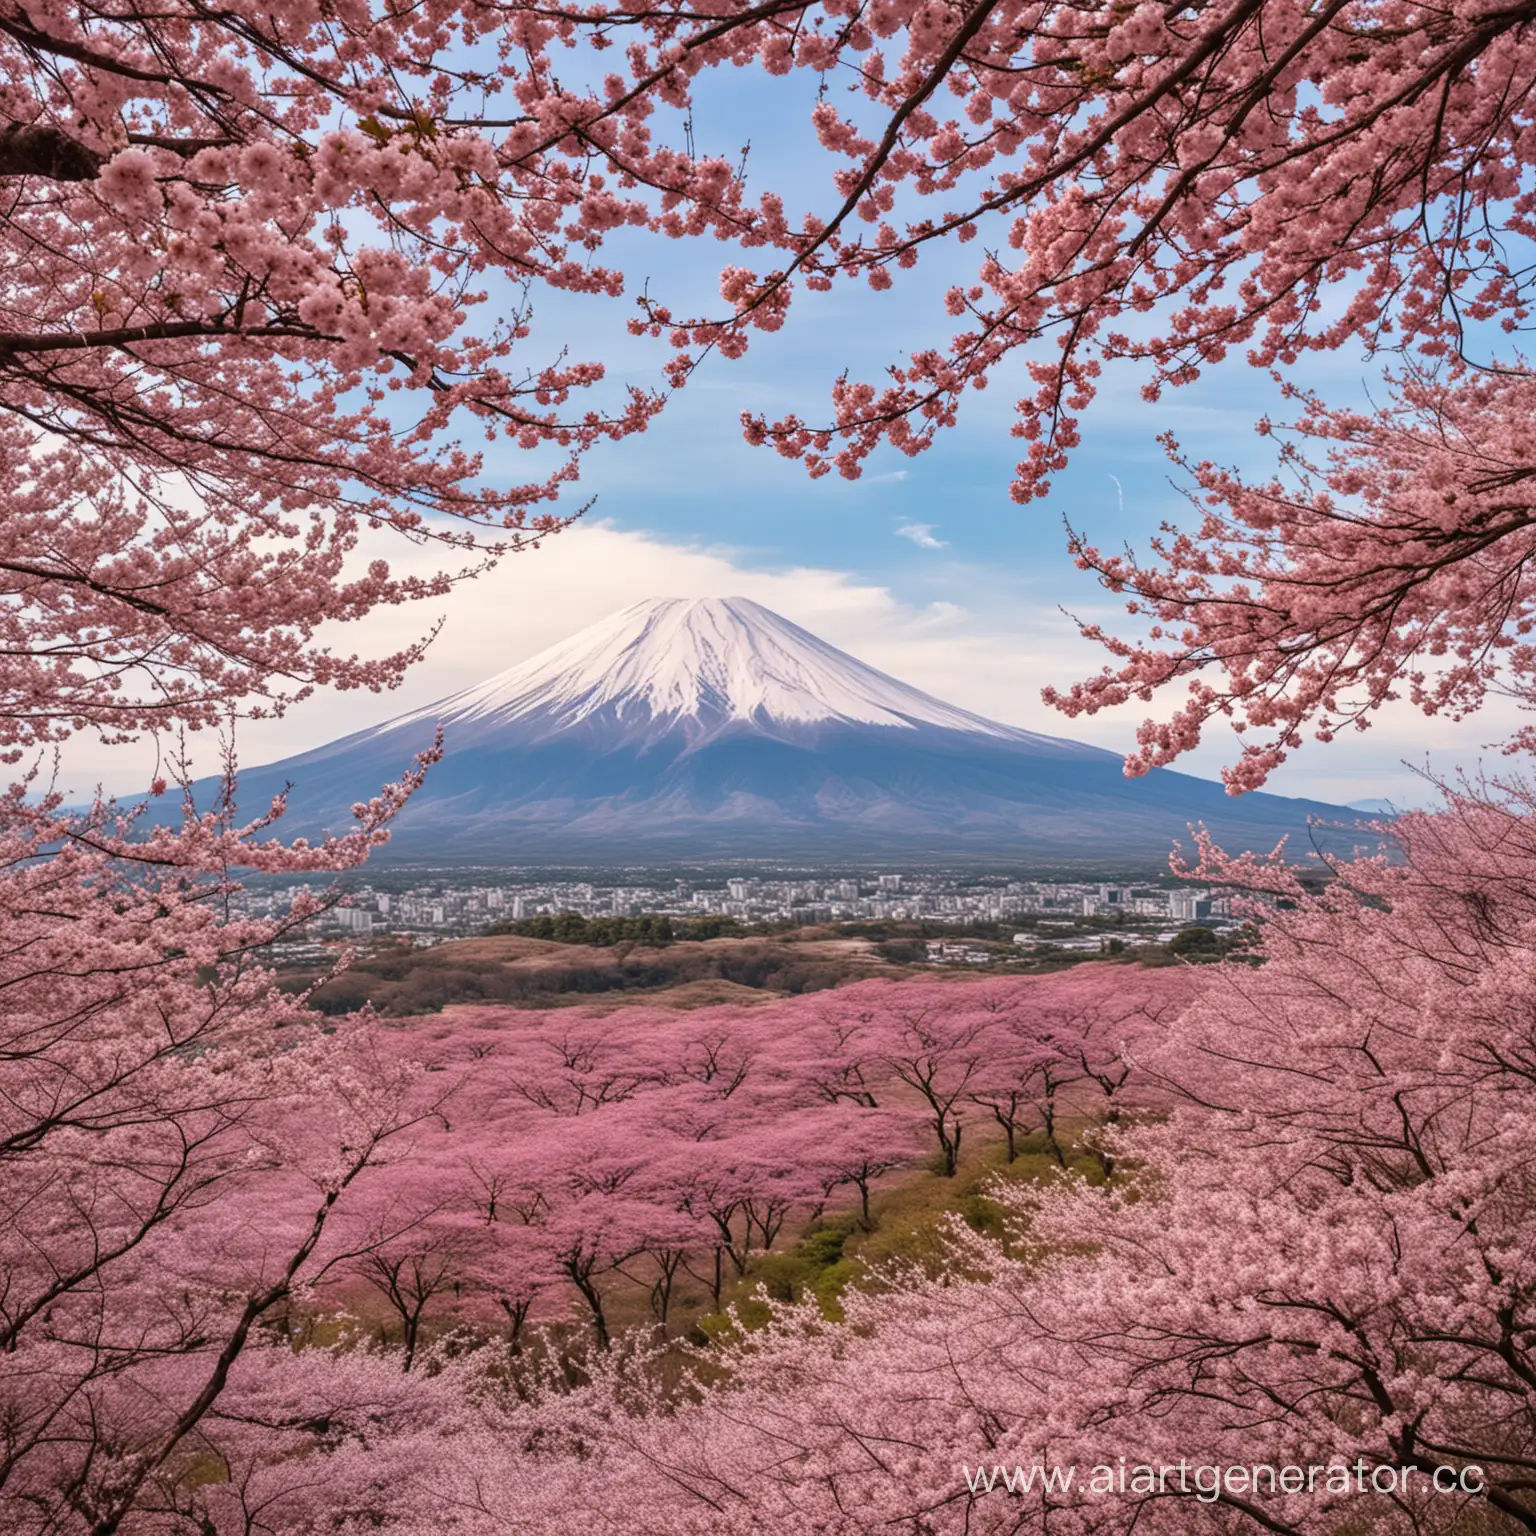 Sakura-Blossoms-Surround-Volcanic-Landscape-in-Japan